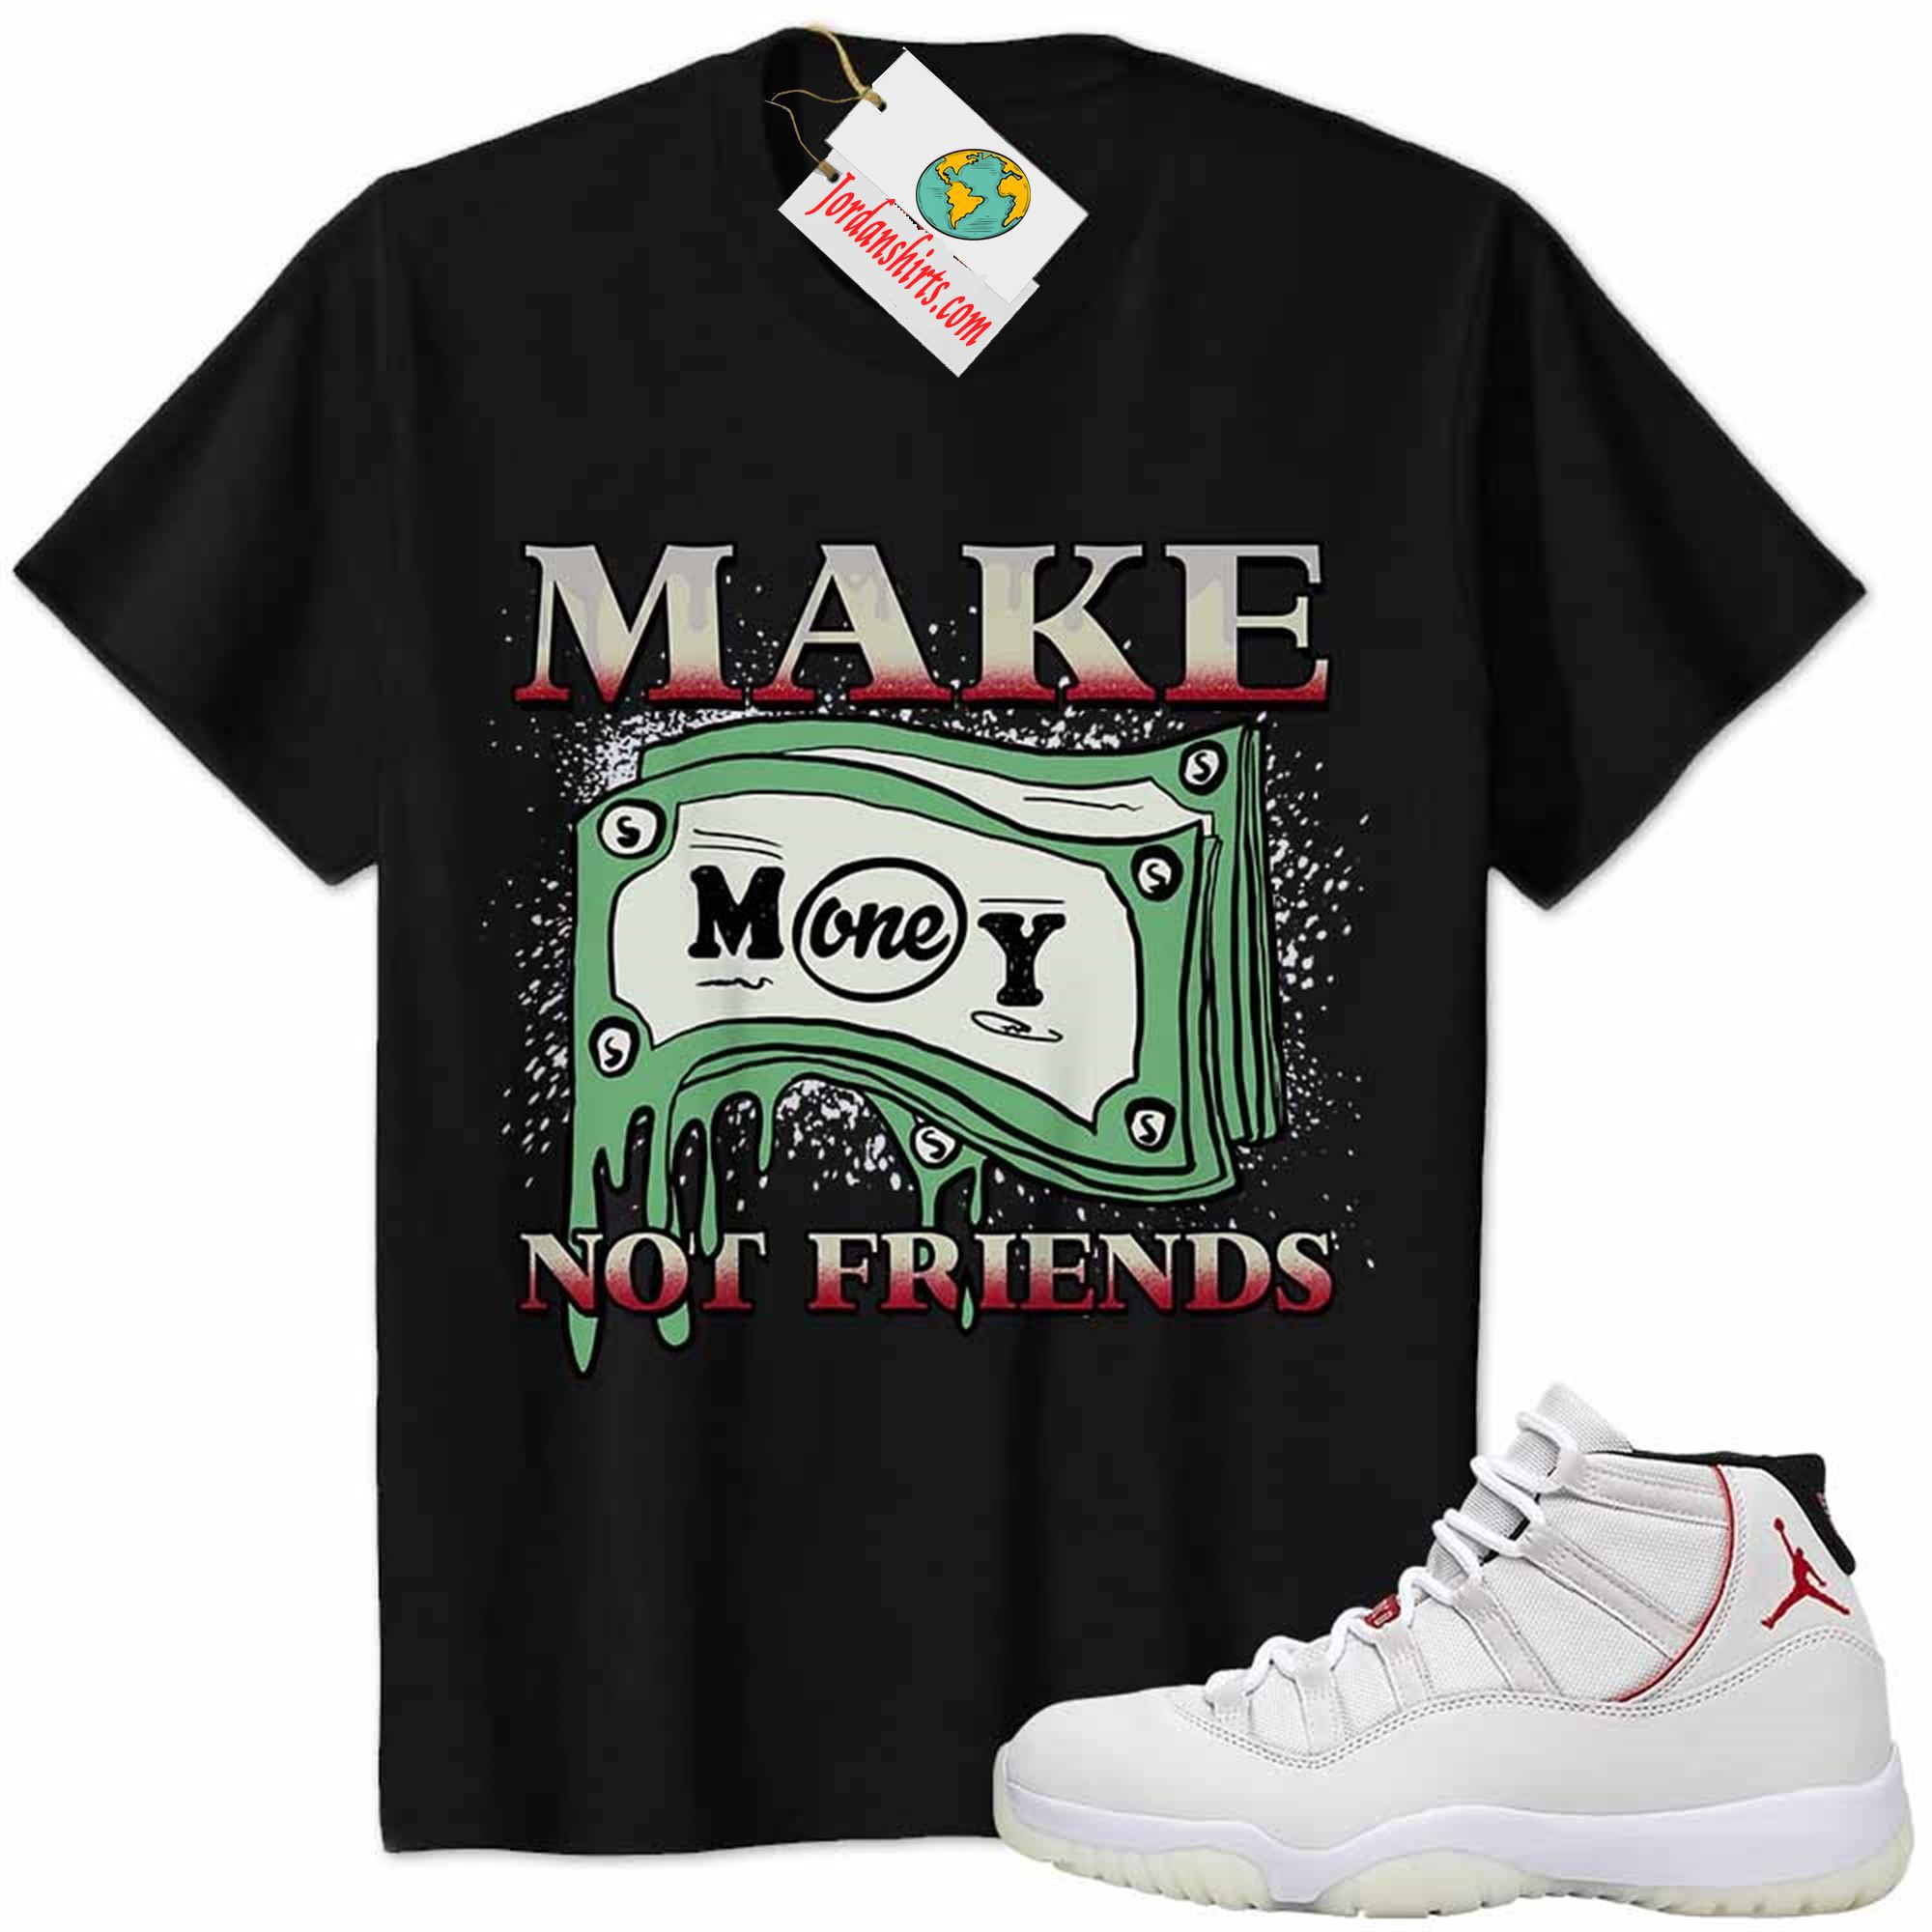 Jordan 11 Shirt, Jordan 11 Platinum Tint Shirt Make Money Graffiti Black Full Size Up To 5xl